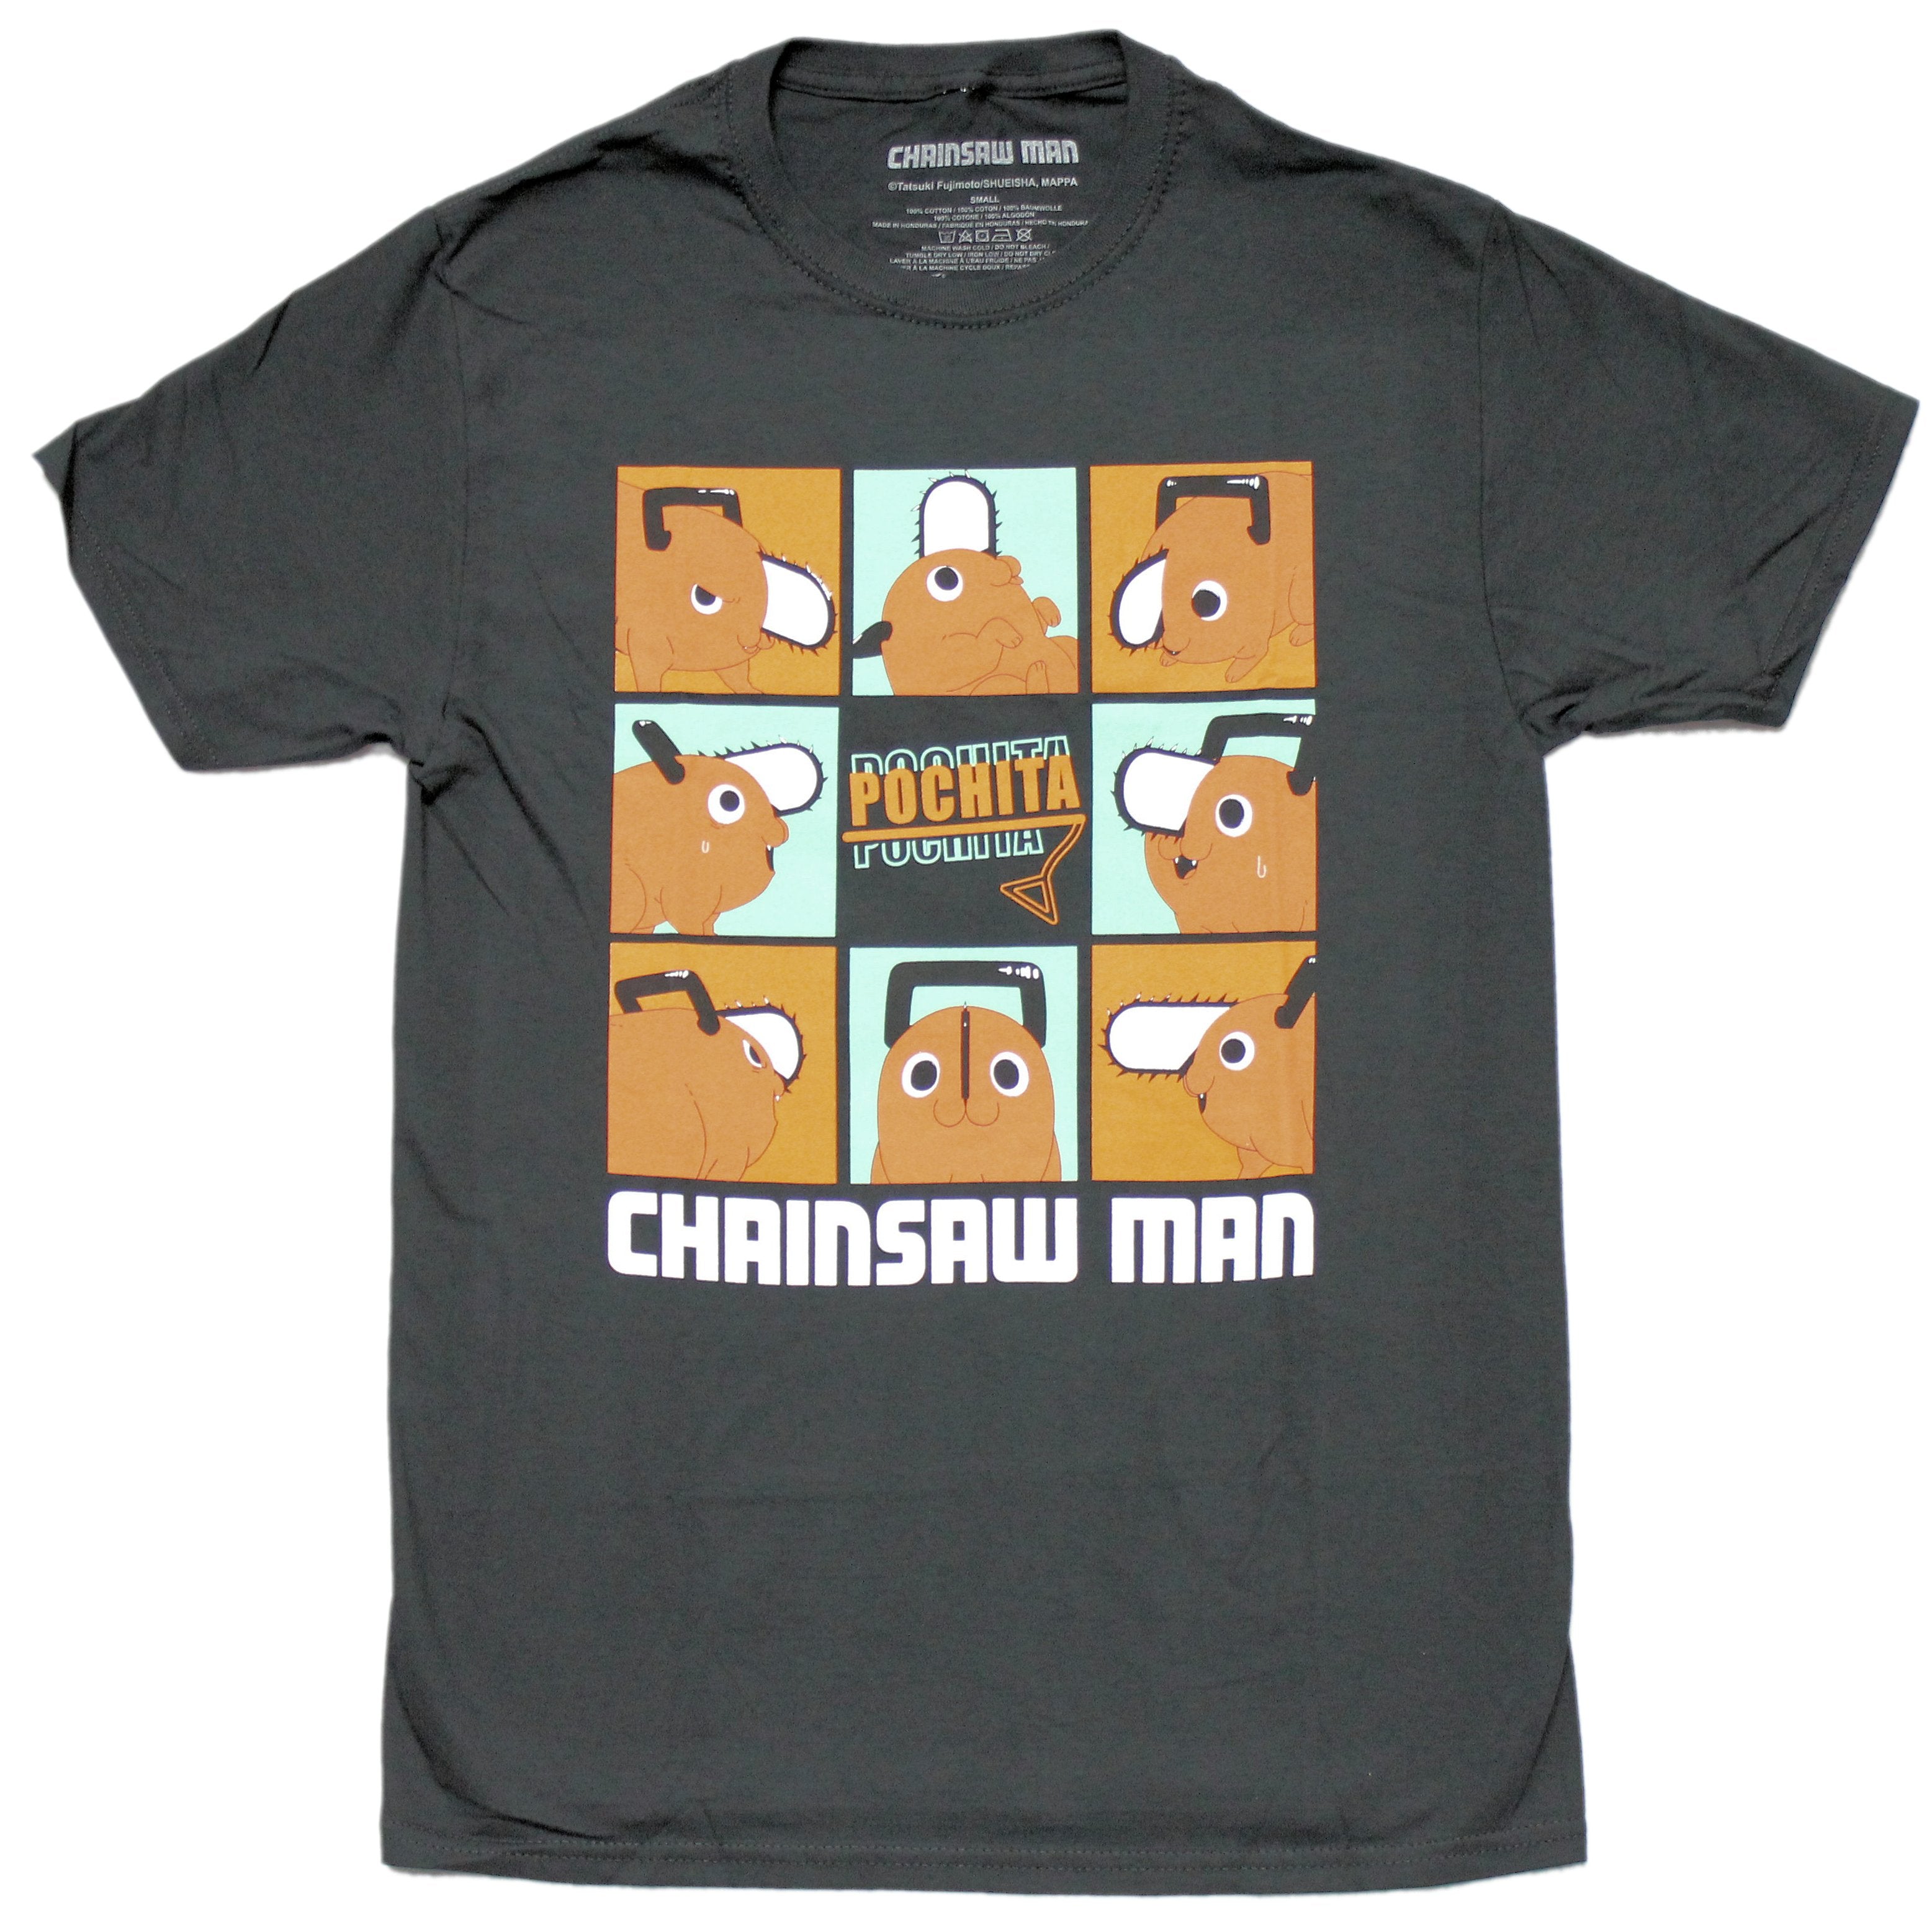 Chainsaw Man mens T-Shirt - Boxed Images of Pochita Around Name